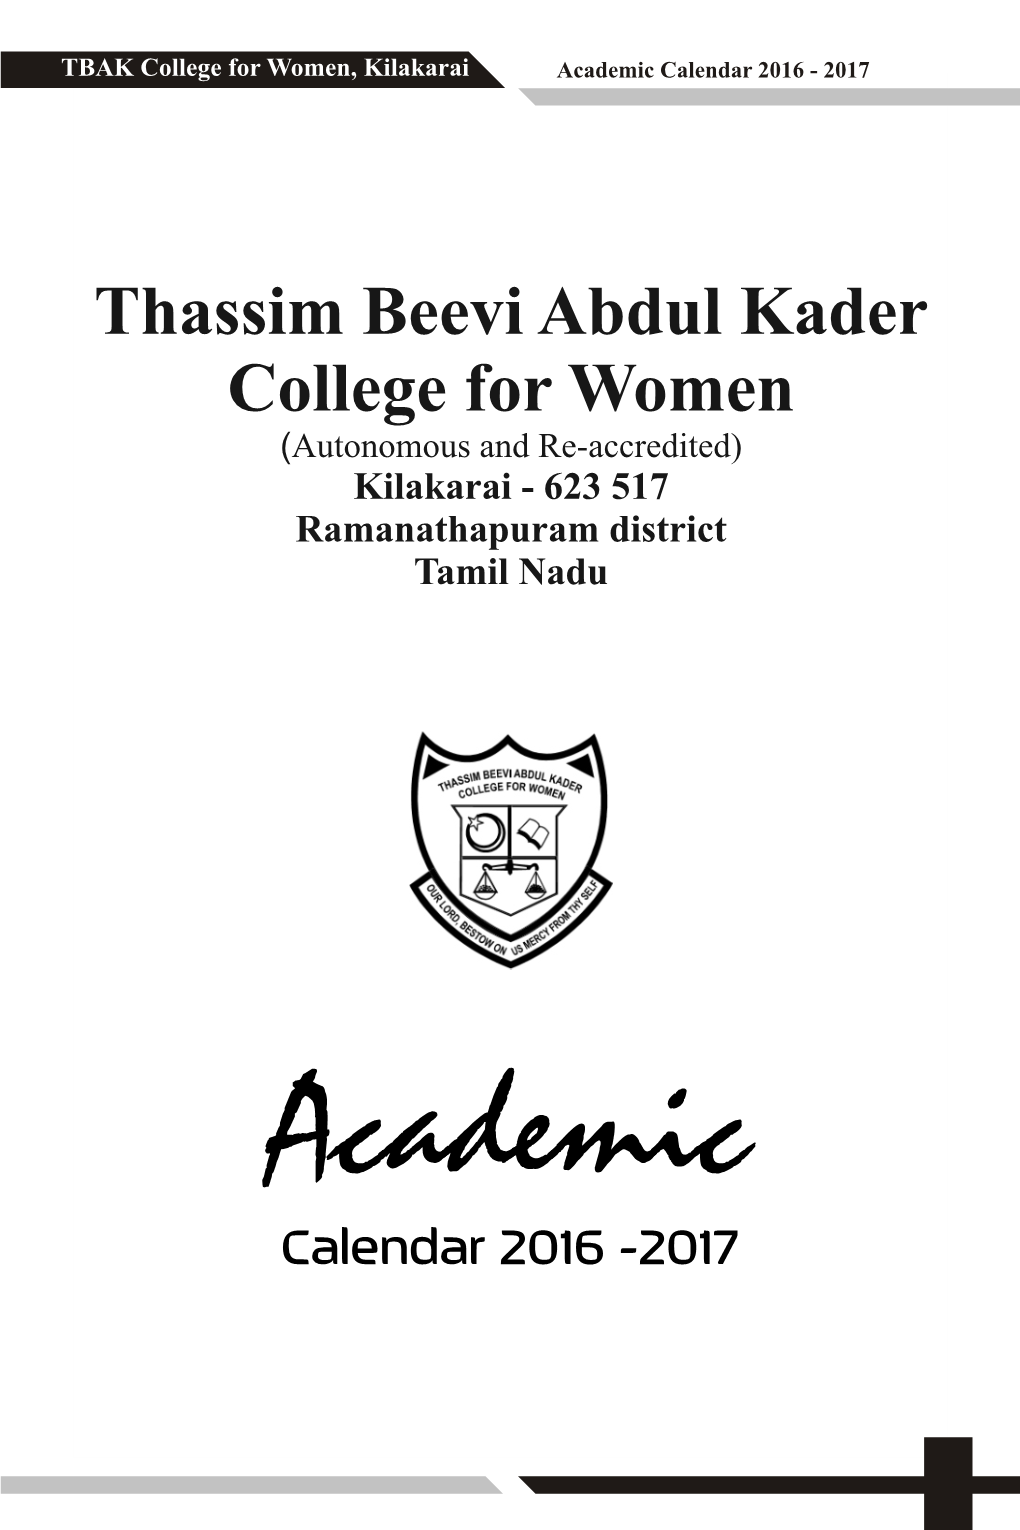 Academic Calendar 16-17